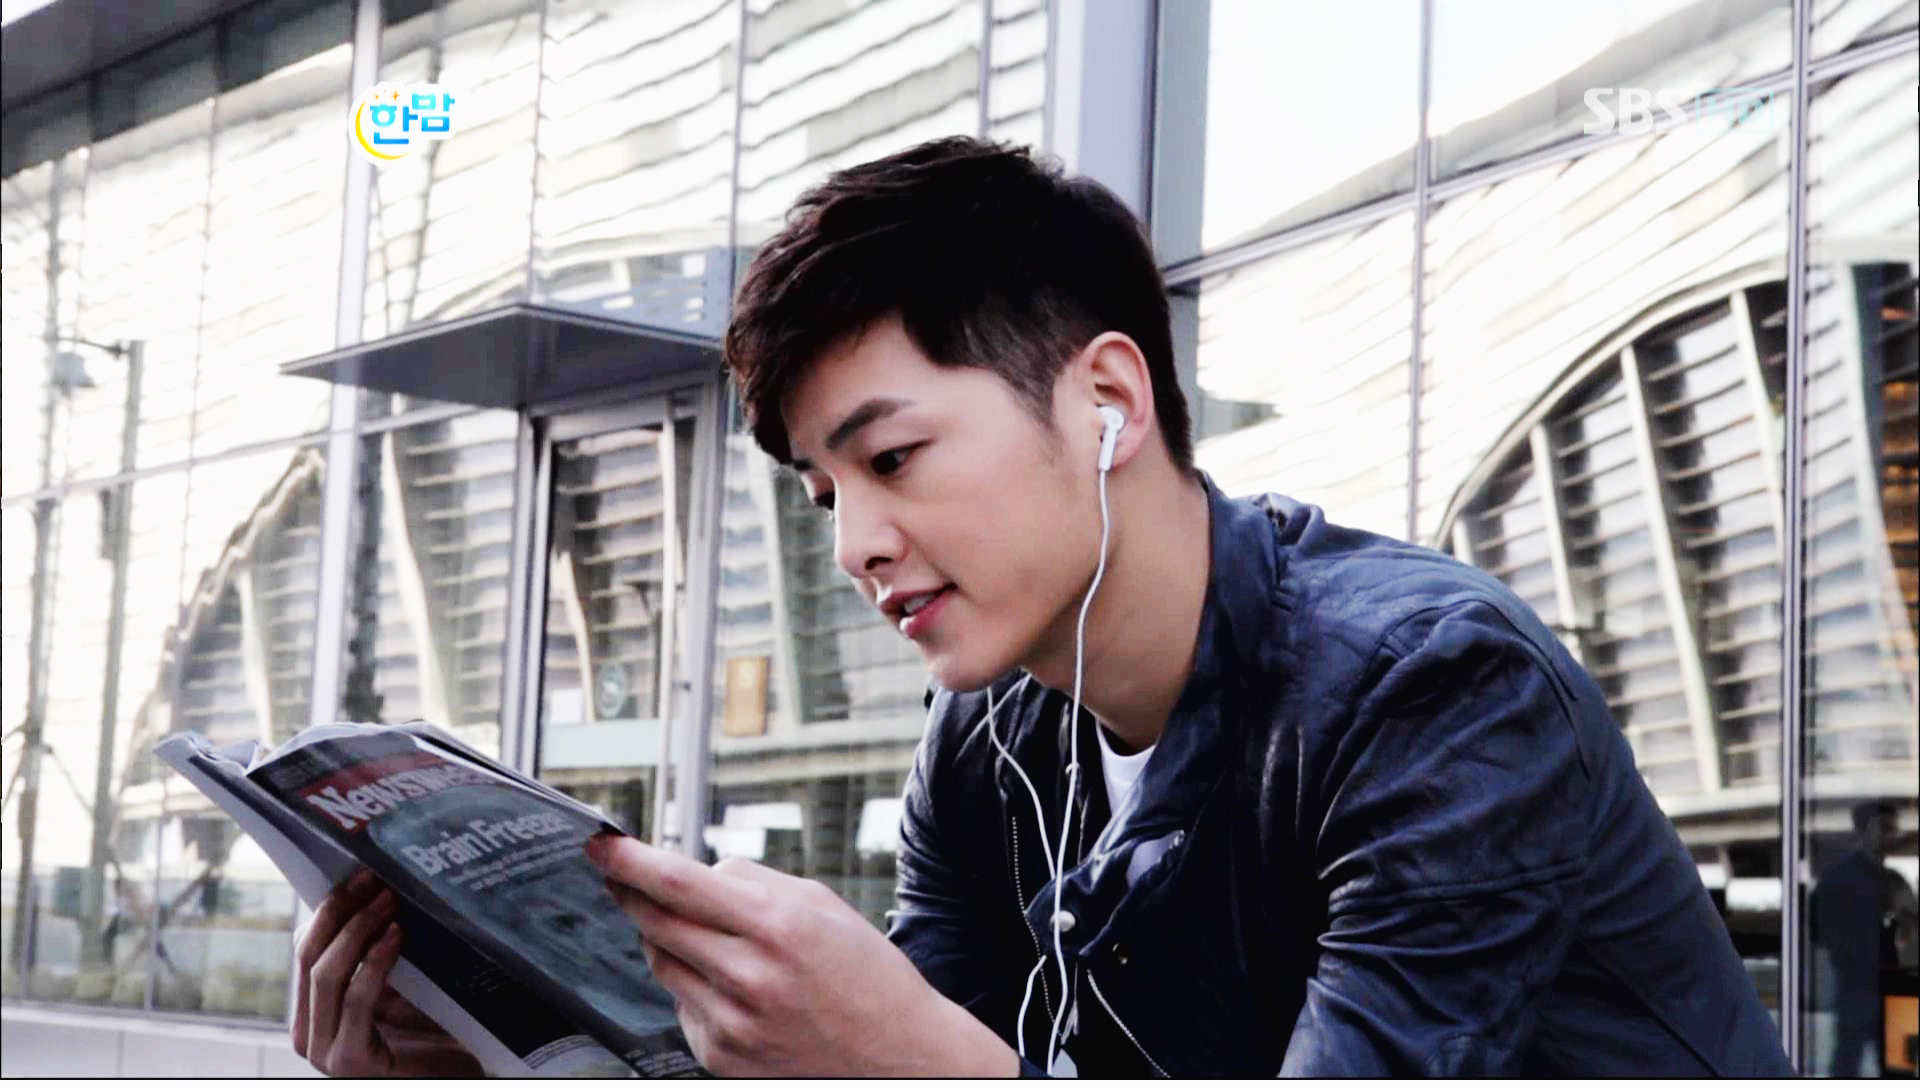 song joong ki wallpaper,technology,reading,electronic device,white collar worker,gadget